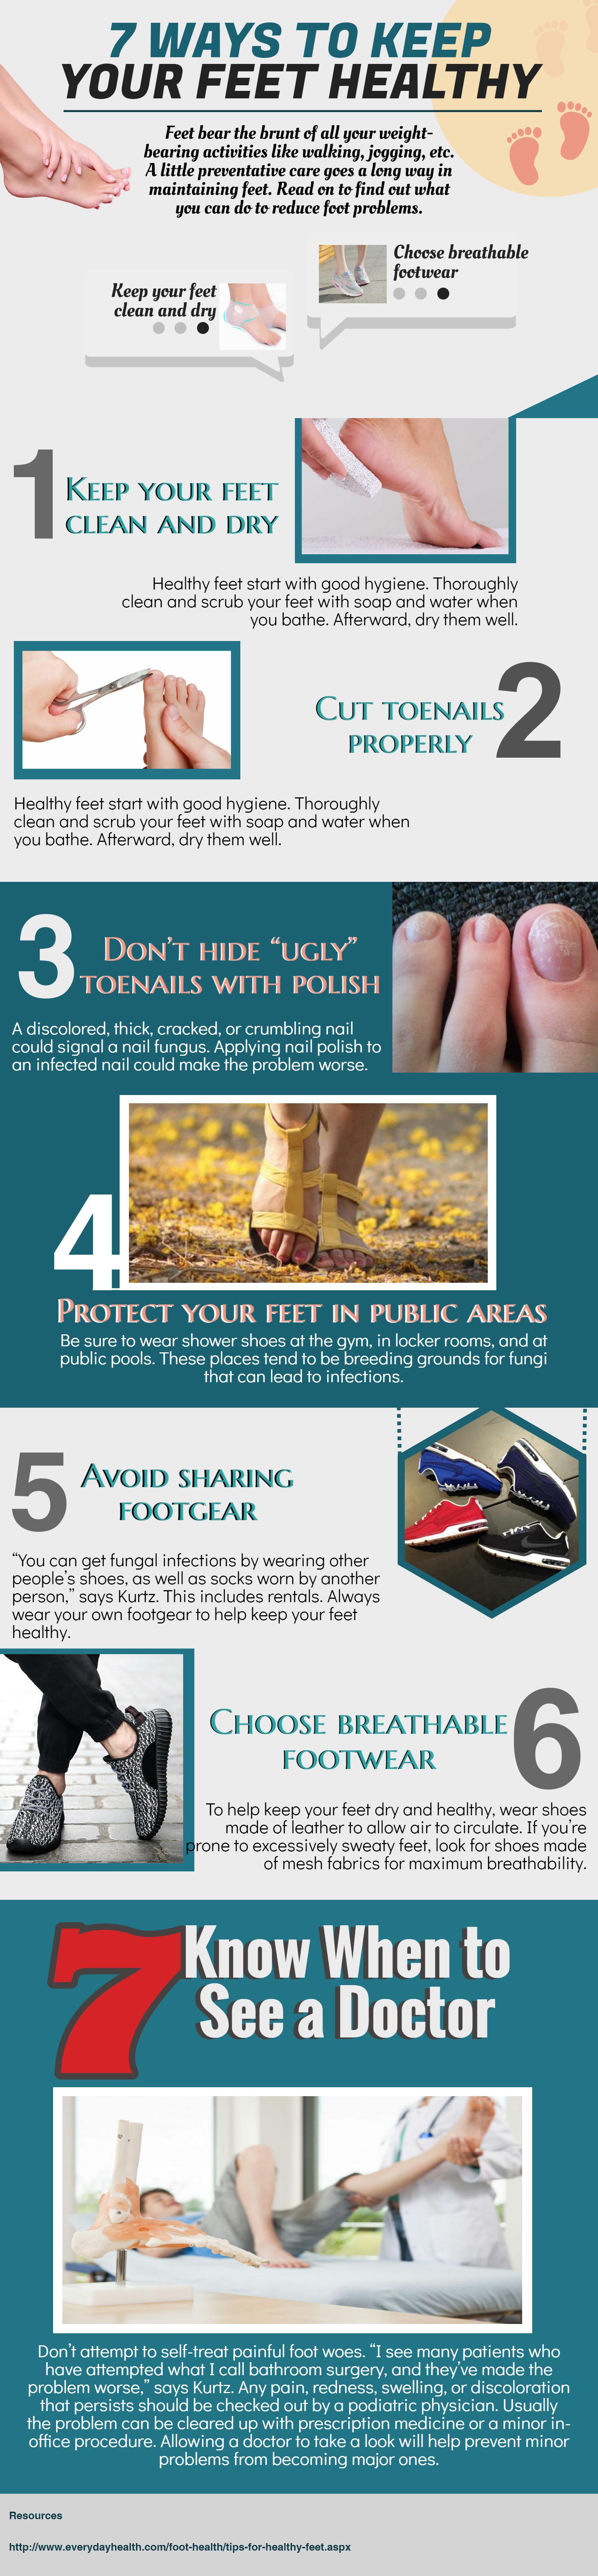 7 Ways to Keep Your Feet Healthy